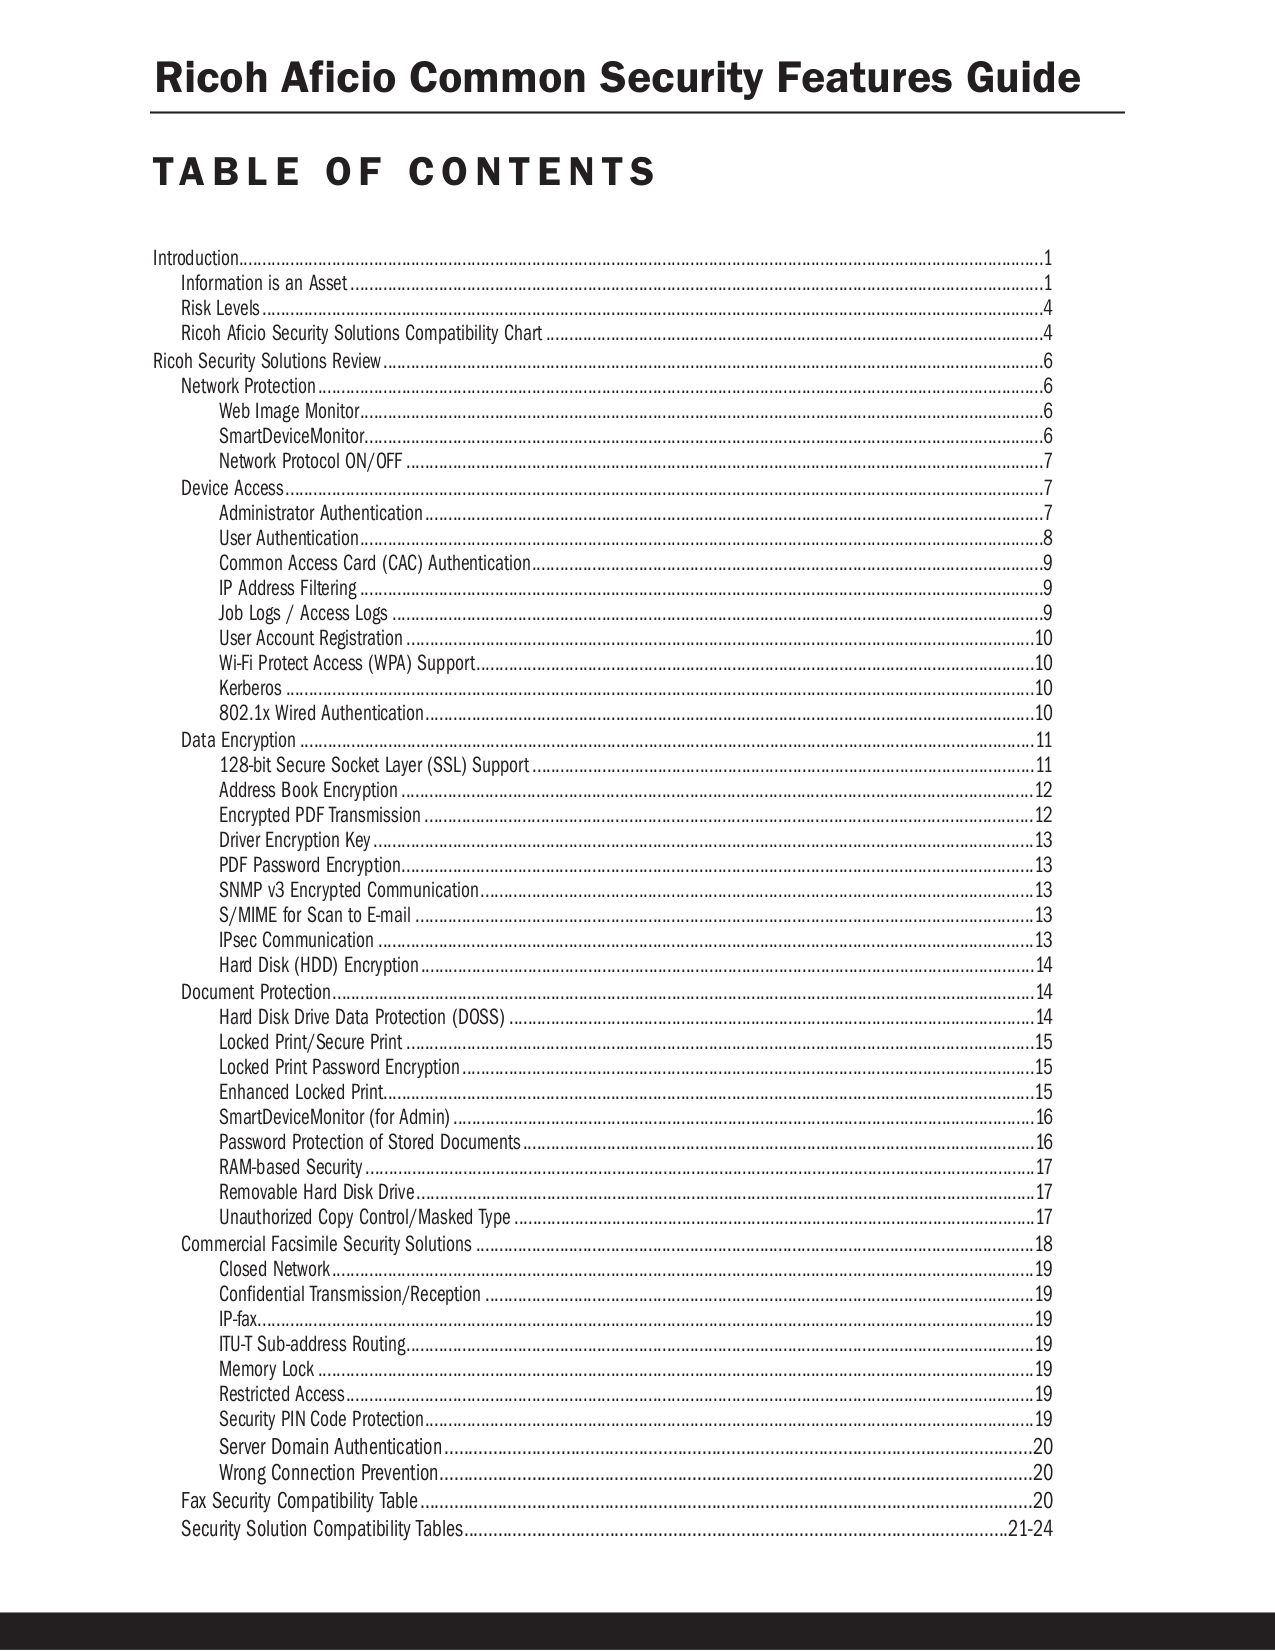 Ricoh Multifunction Printer AC104 pdf page preview